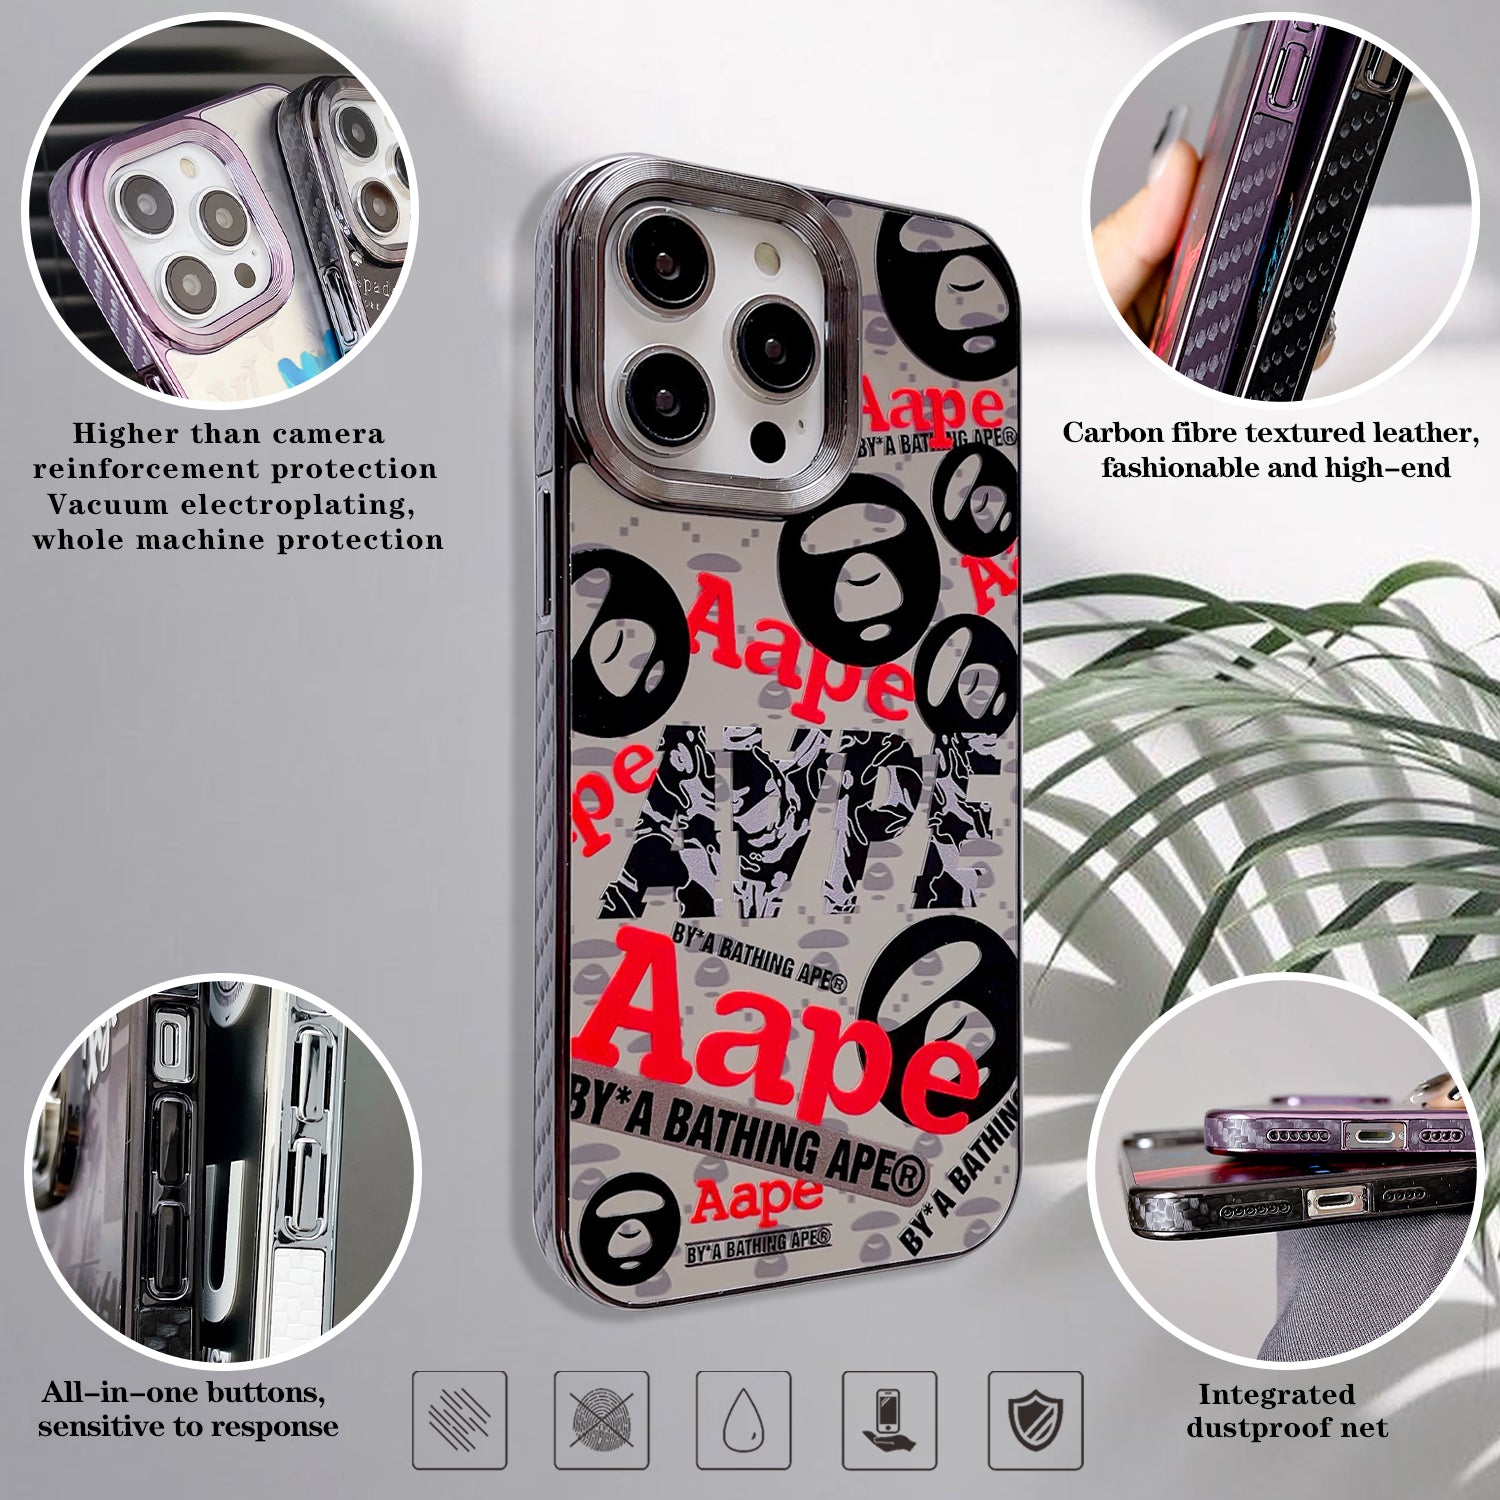 AAPE Ape iPhone case A25  A26